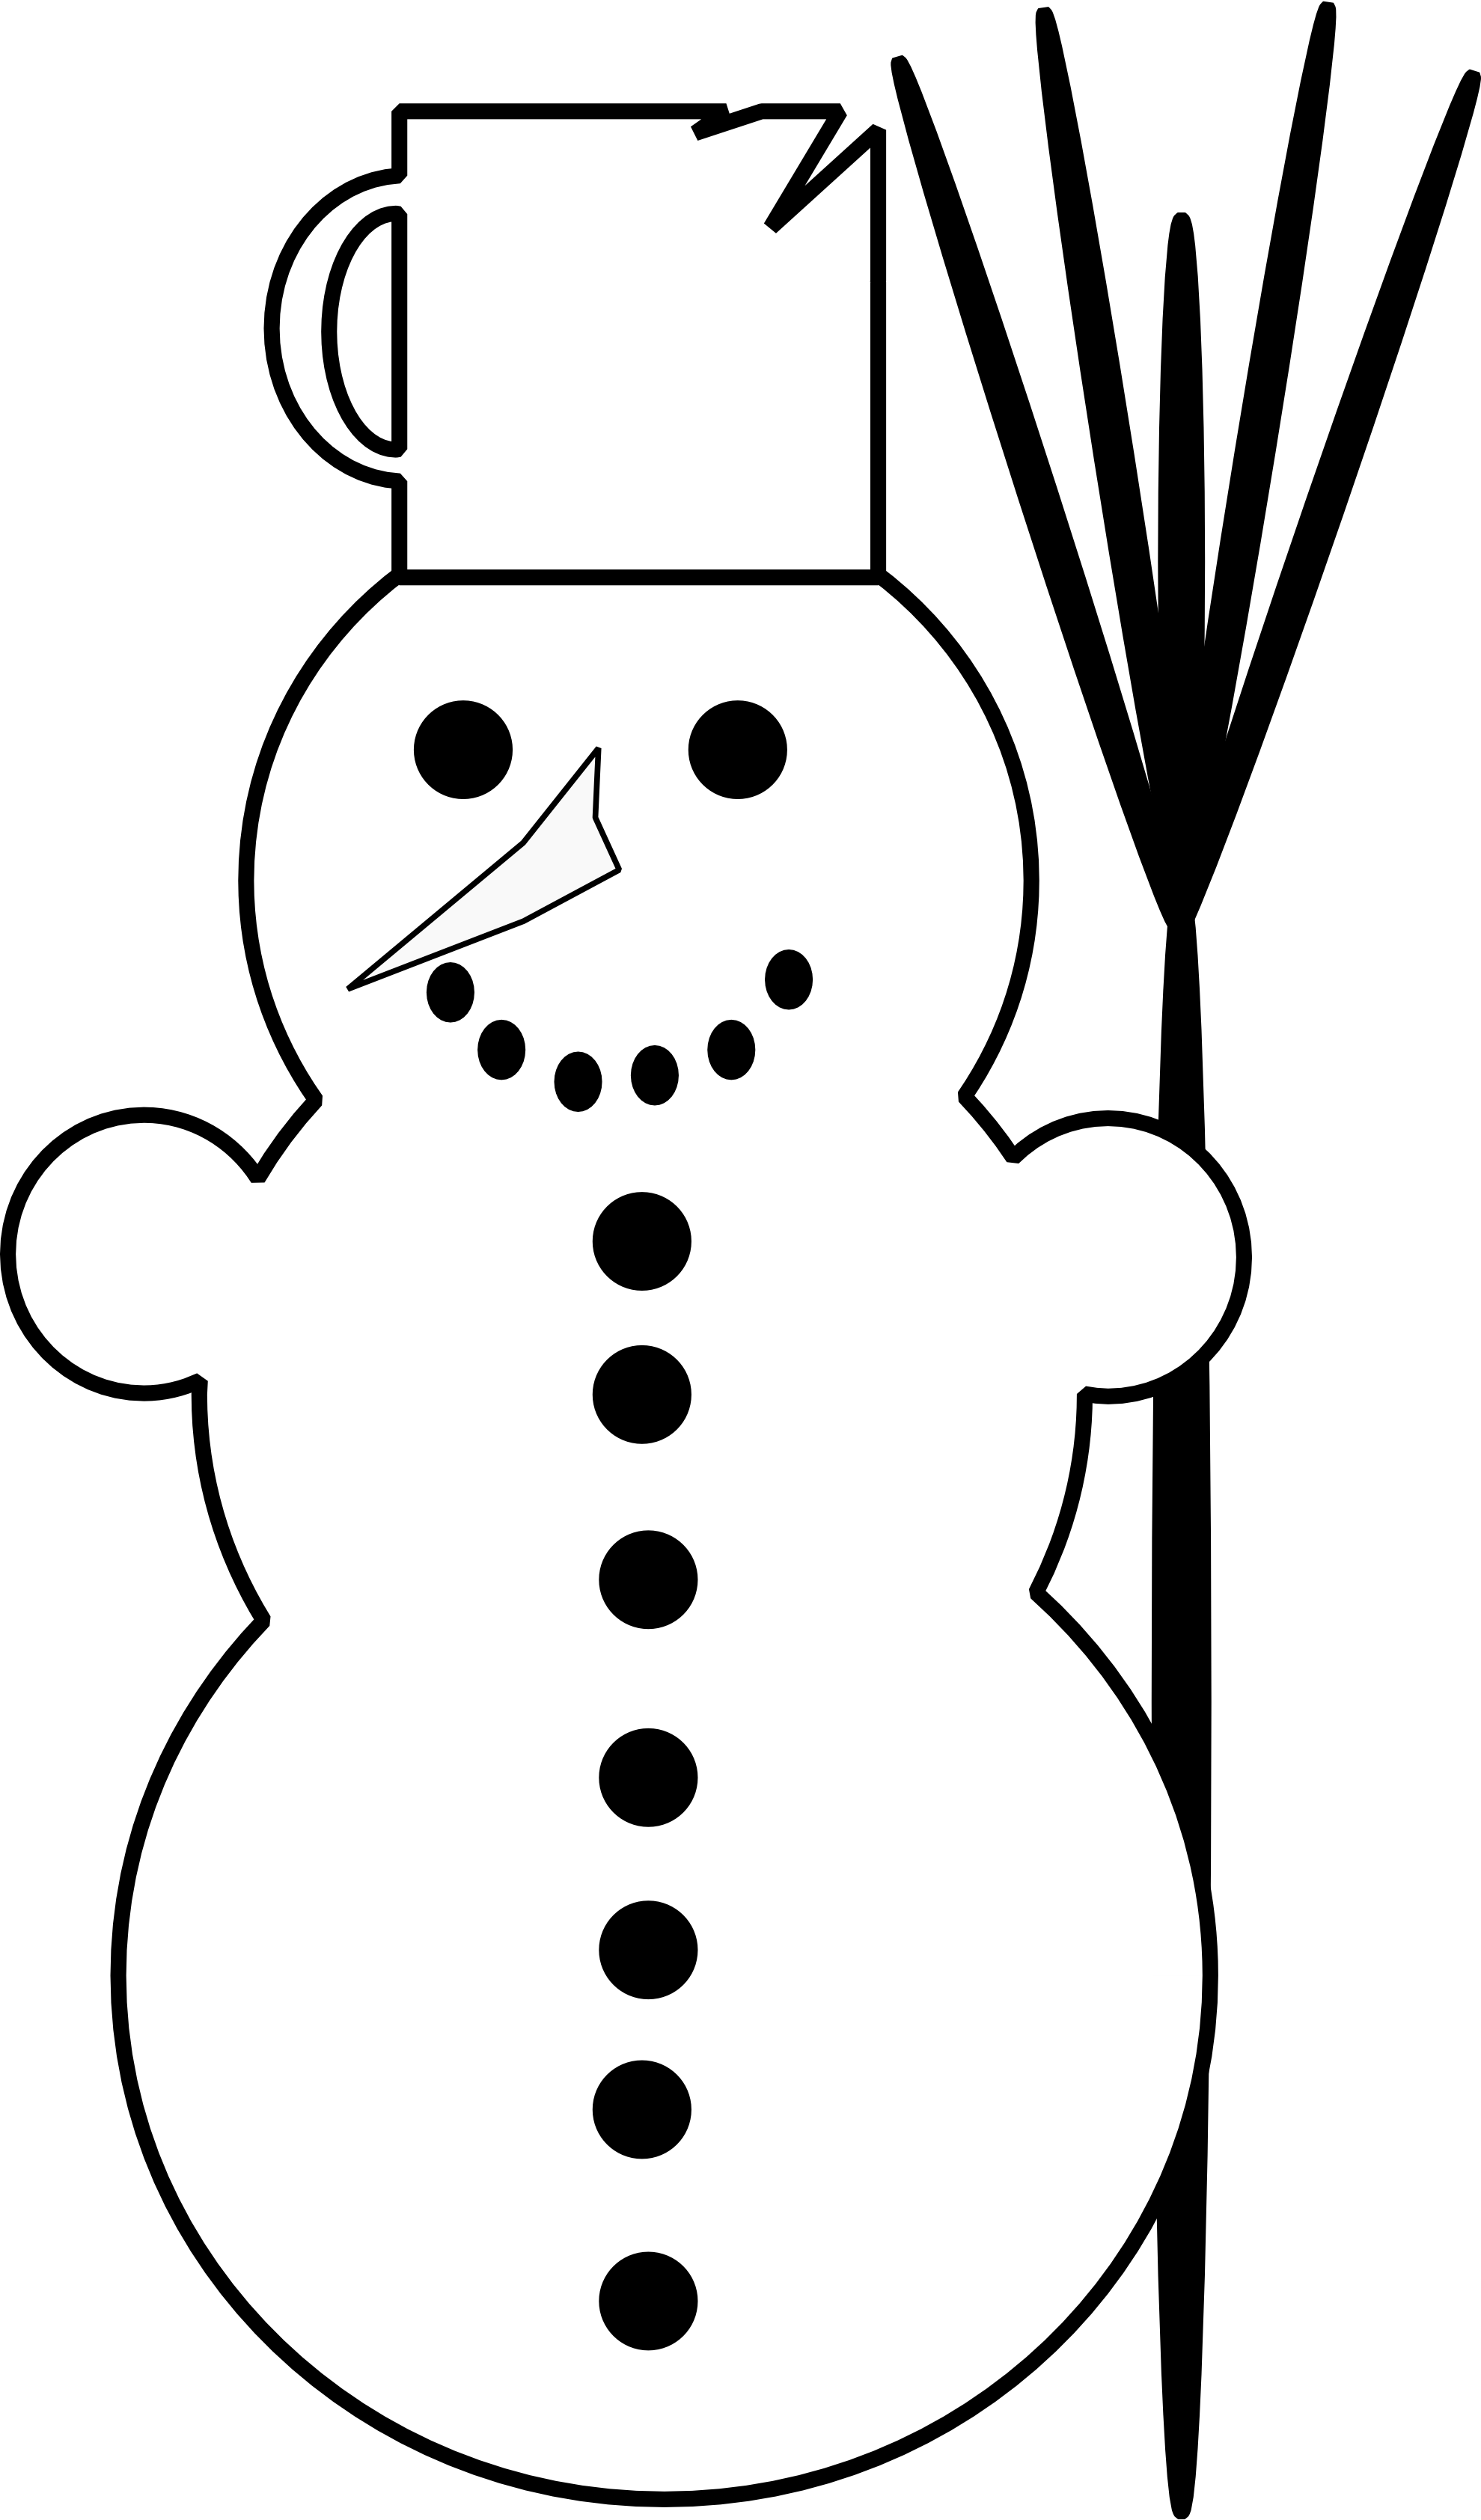 Snowman 2 Black White Line Art Christmas Xmas Coloring - Snowman 2 Black White Line Art Christmas Xmas Coloring (1979x3368)